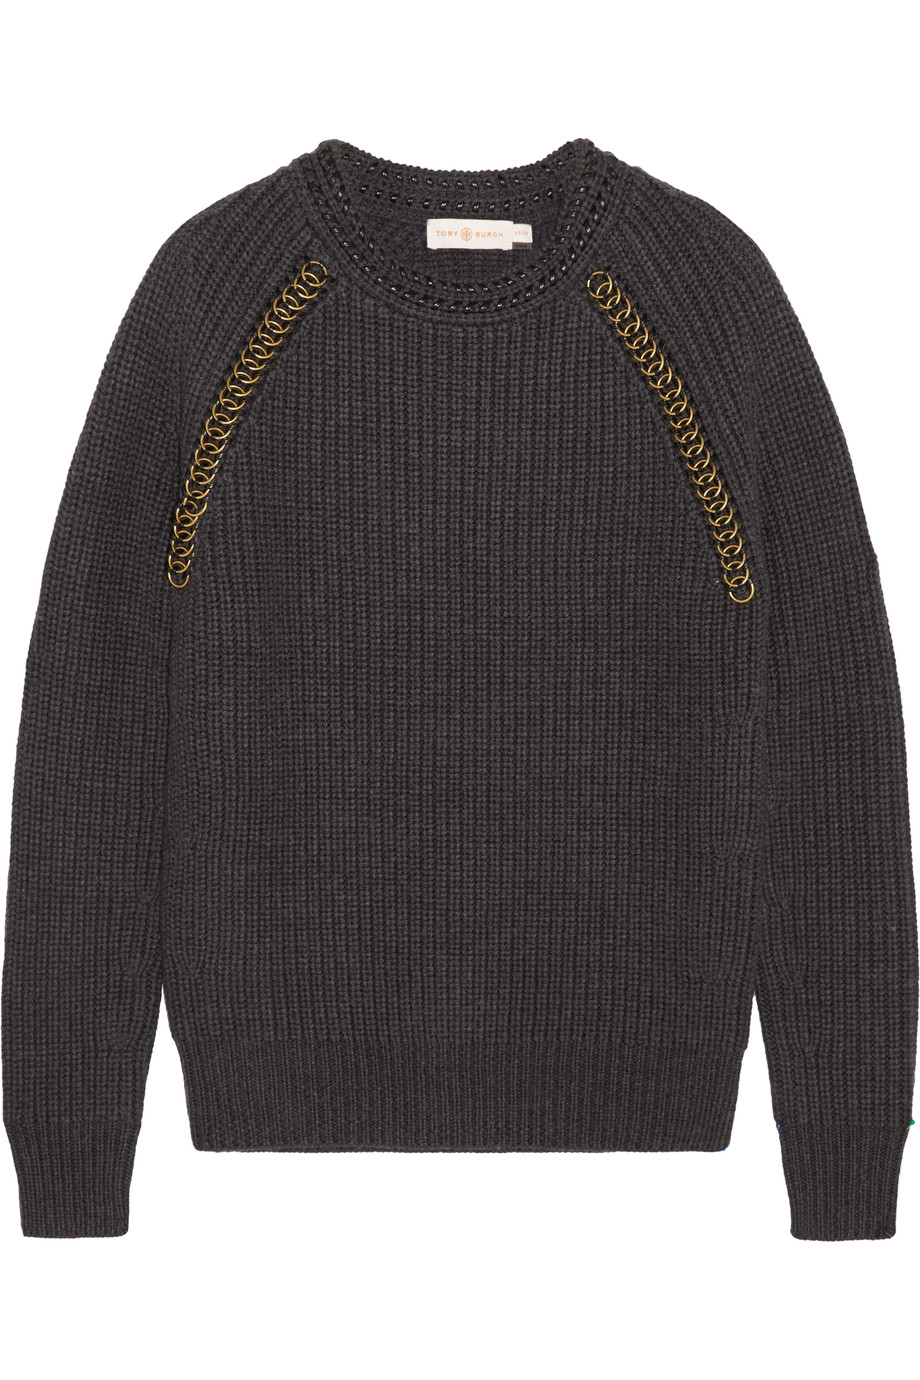 Tory Burch Trudy Embellished Wool Sweater | ModeSens